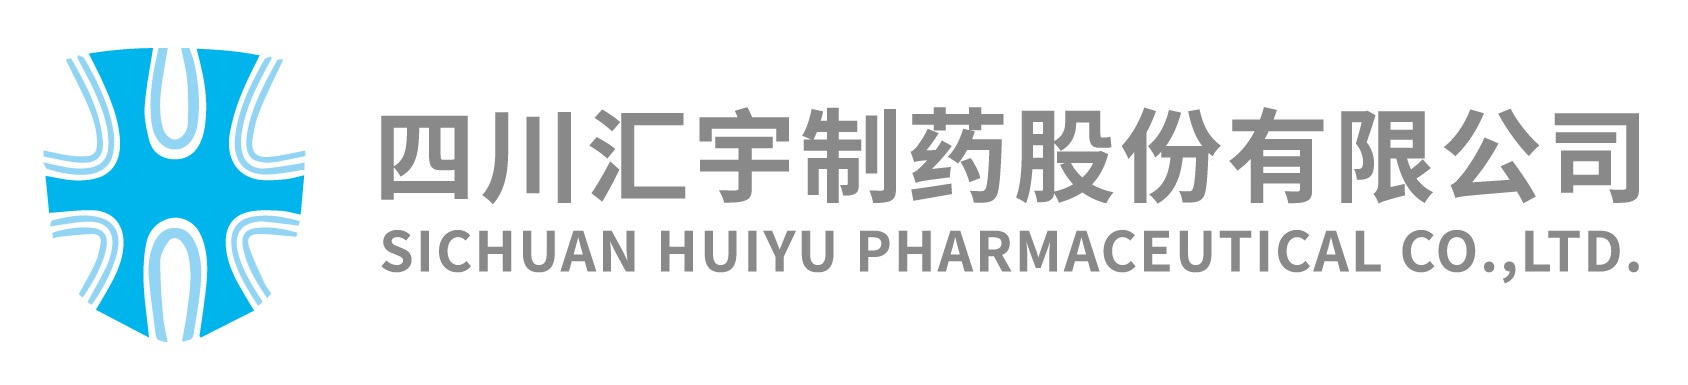 SICHUAN HUIYU PHARMACEUTICAL CO. LTD